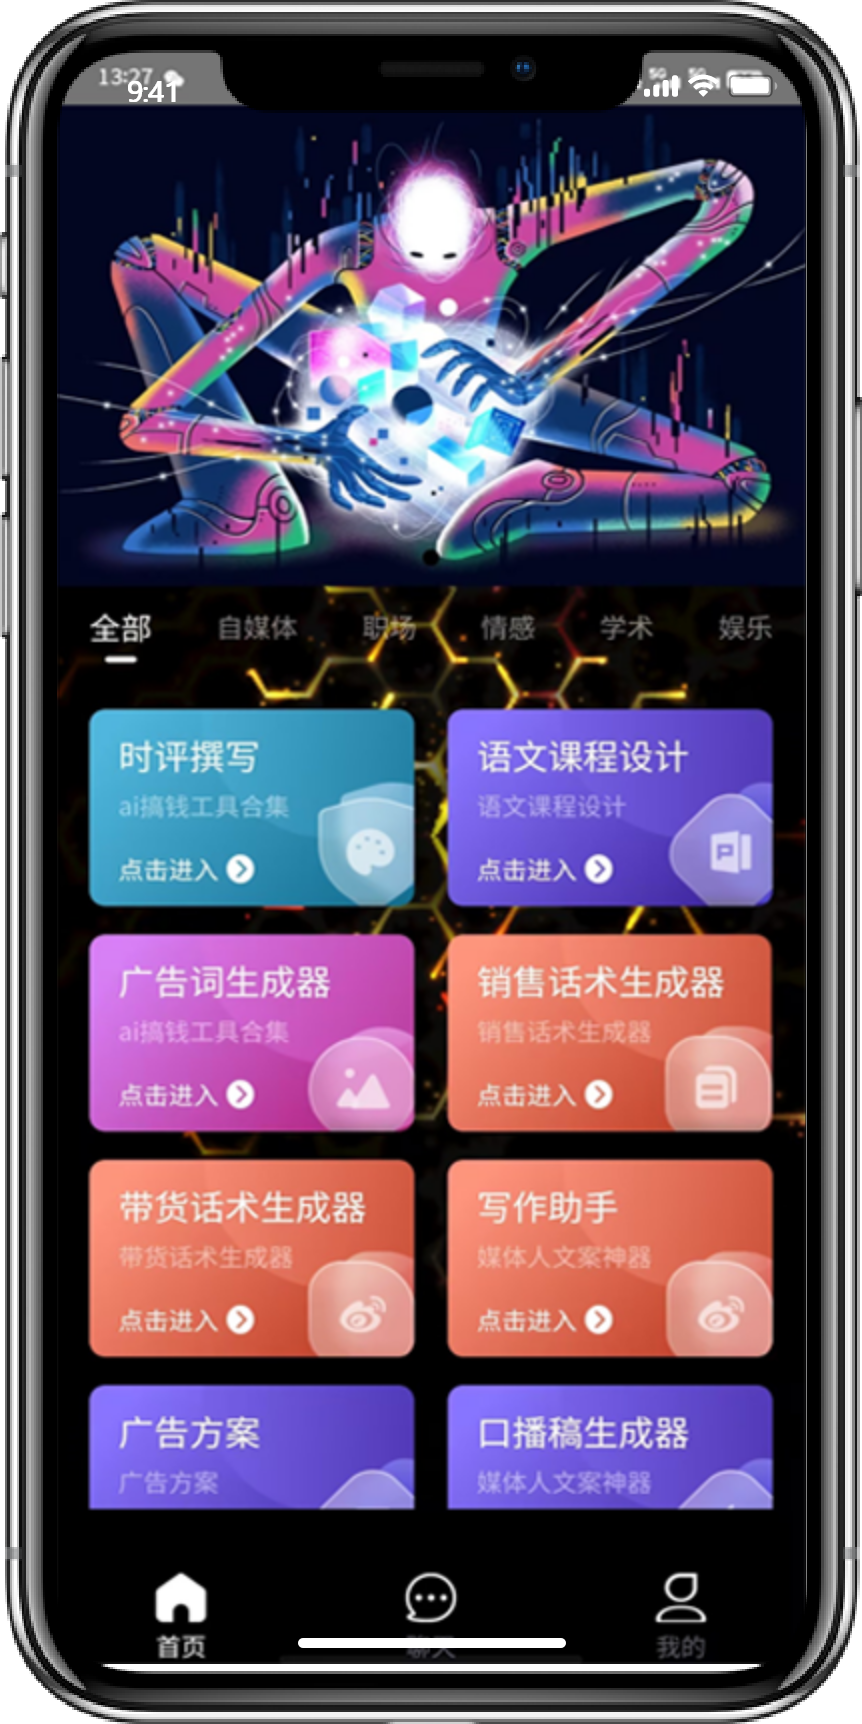 iPhone App Mockup - Shards App Promo Demo